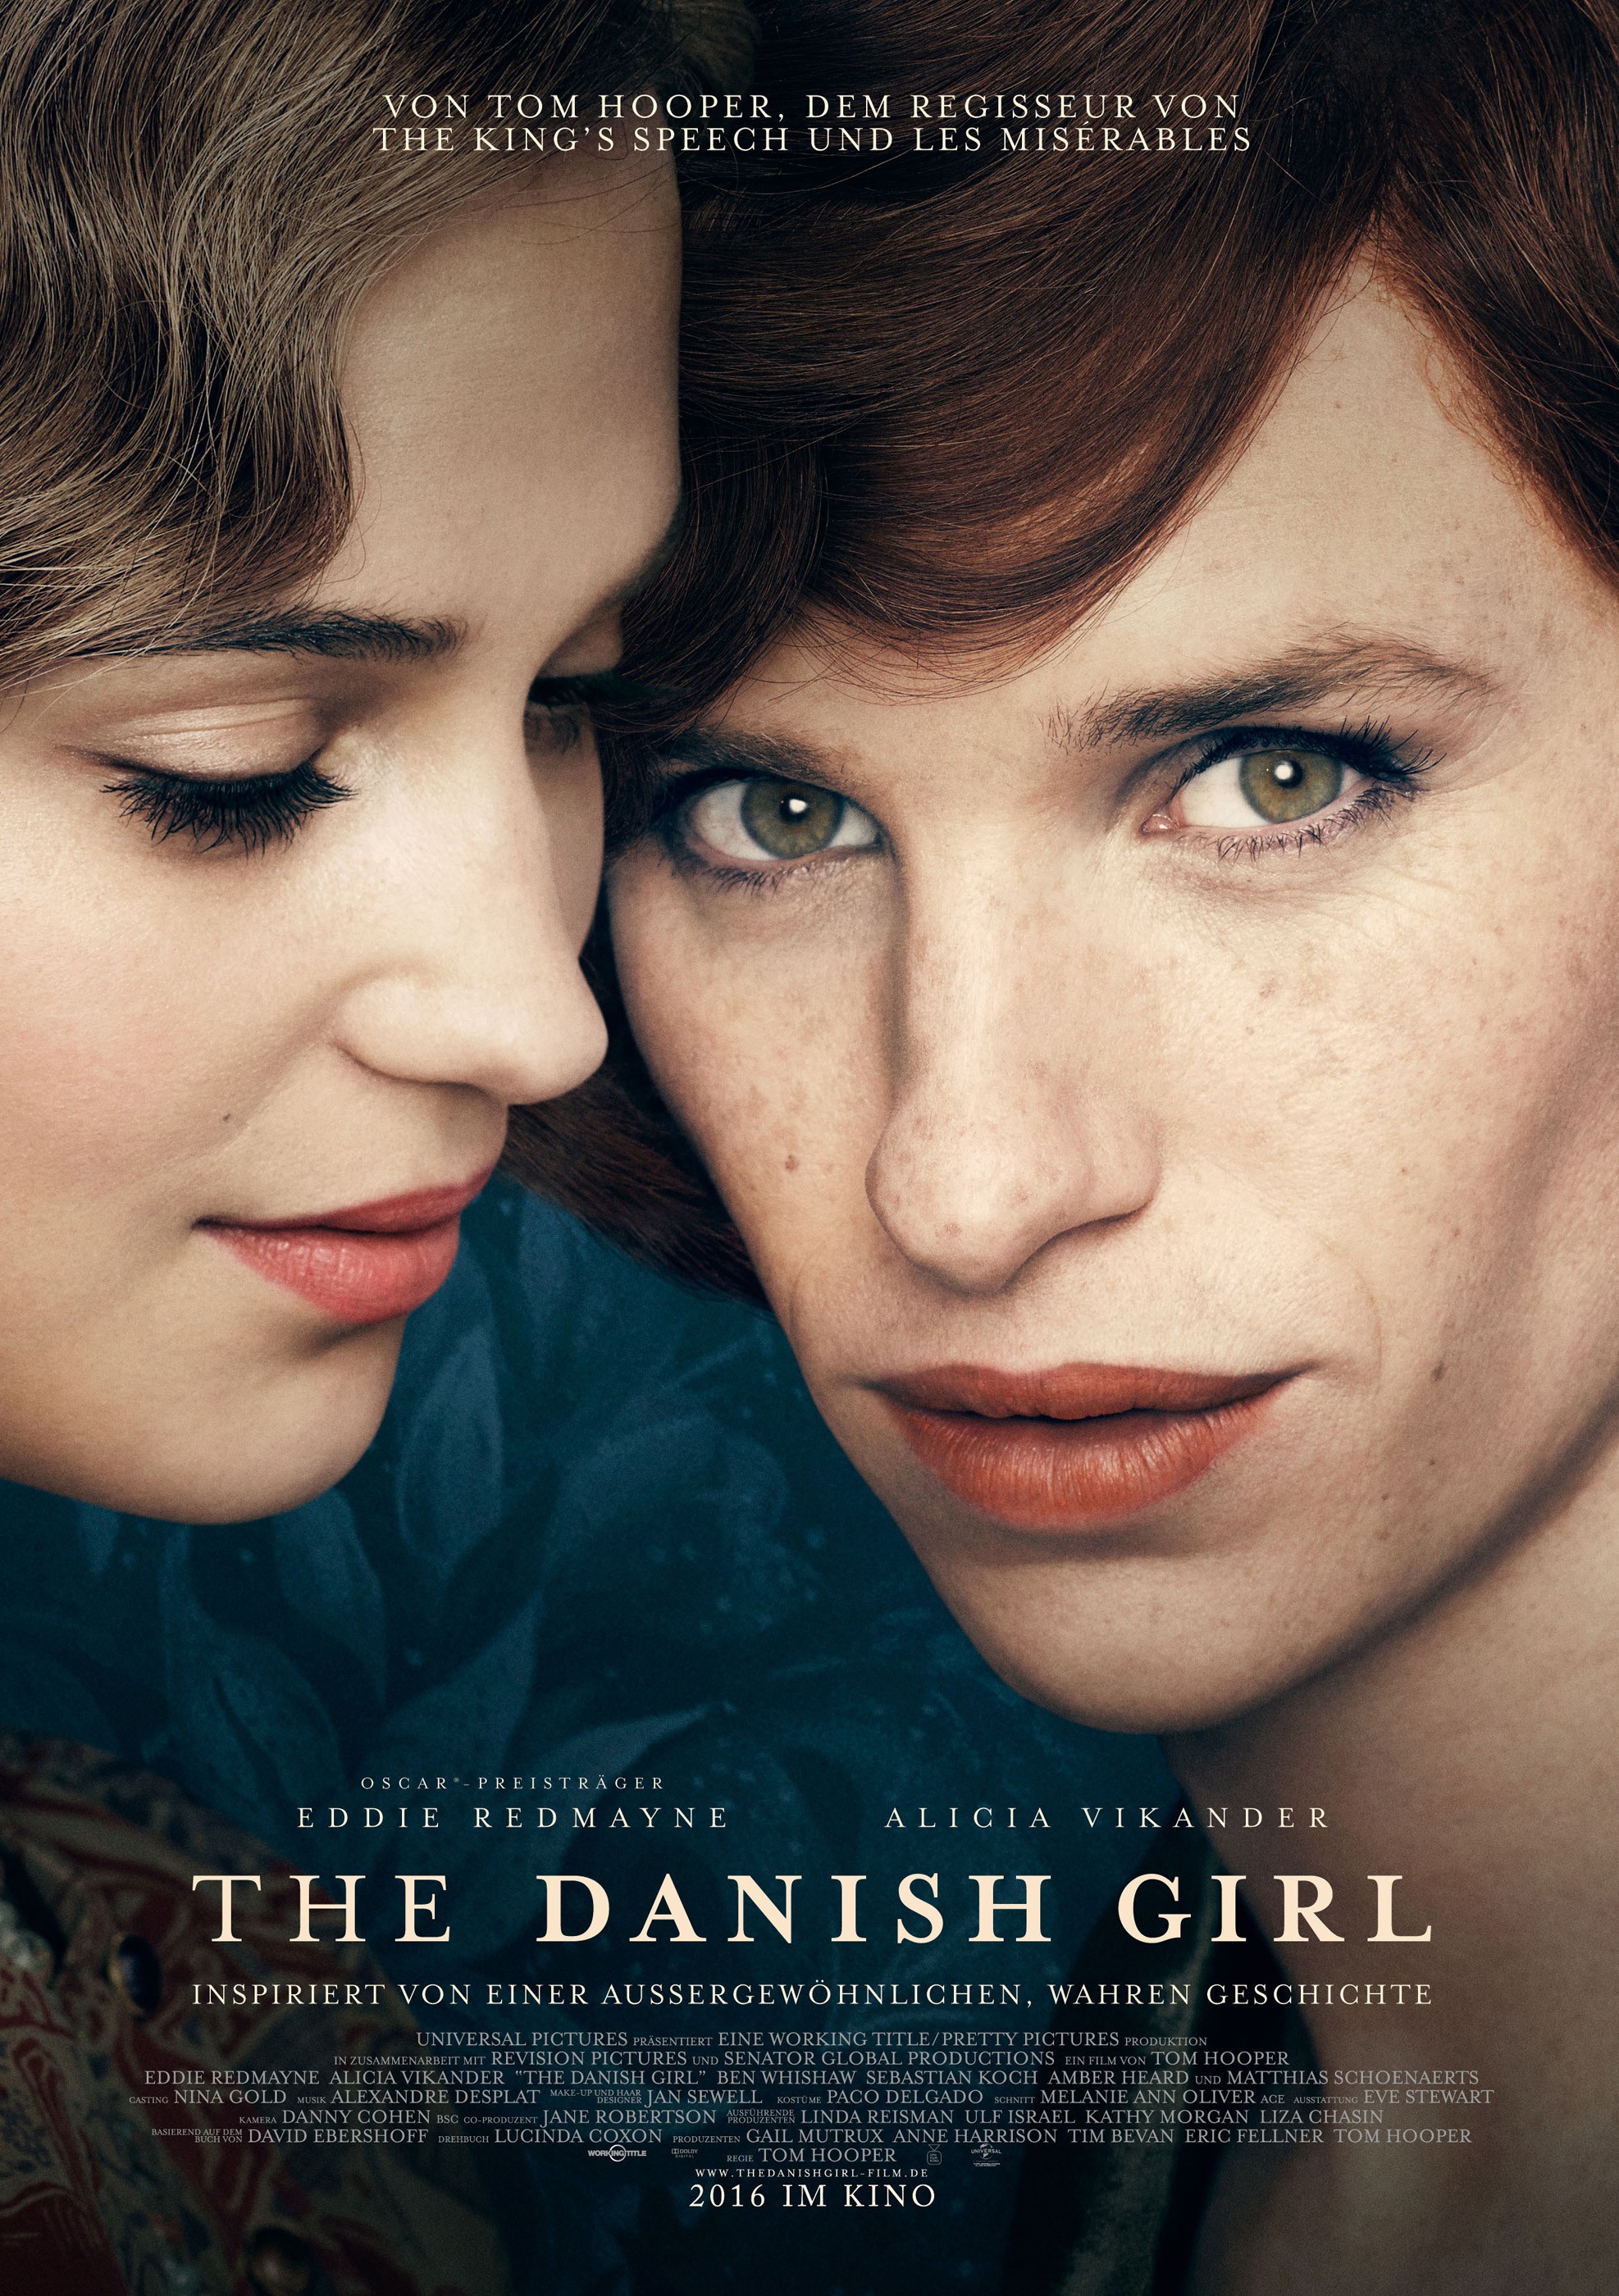 To-Koritsi-apo-th-Dania-Danish-Girl-movie-Technopolis-multiplex-heraklion-crete-cinemas-movies-poster